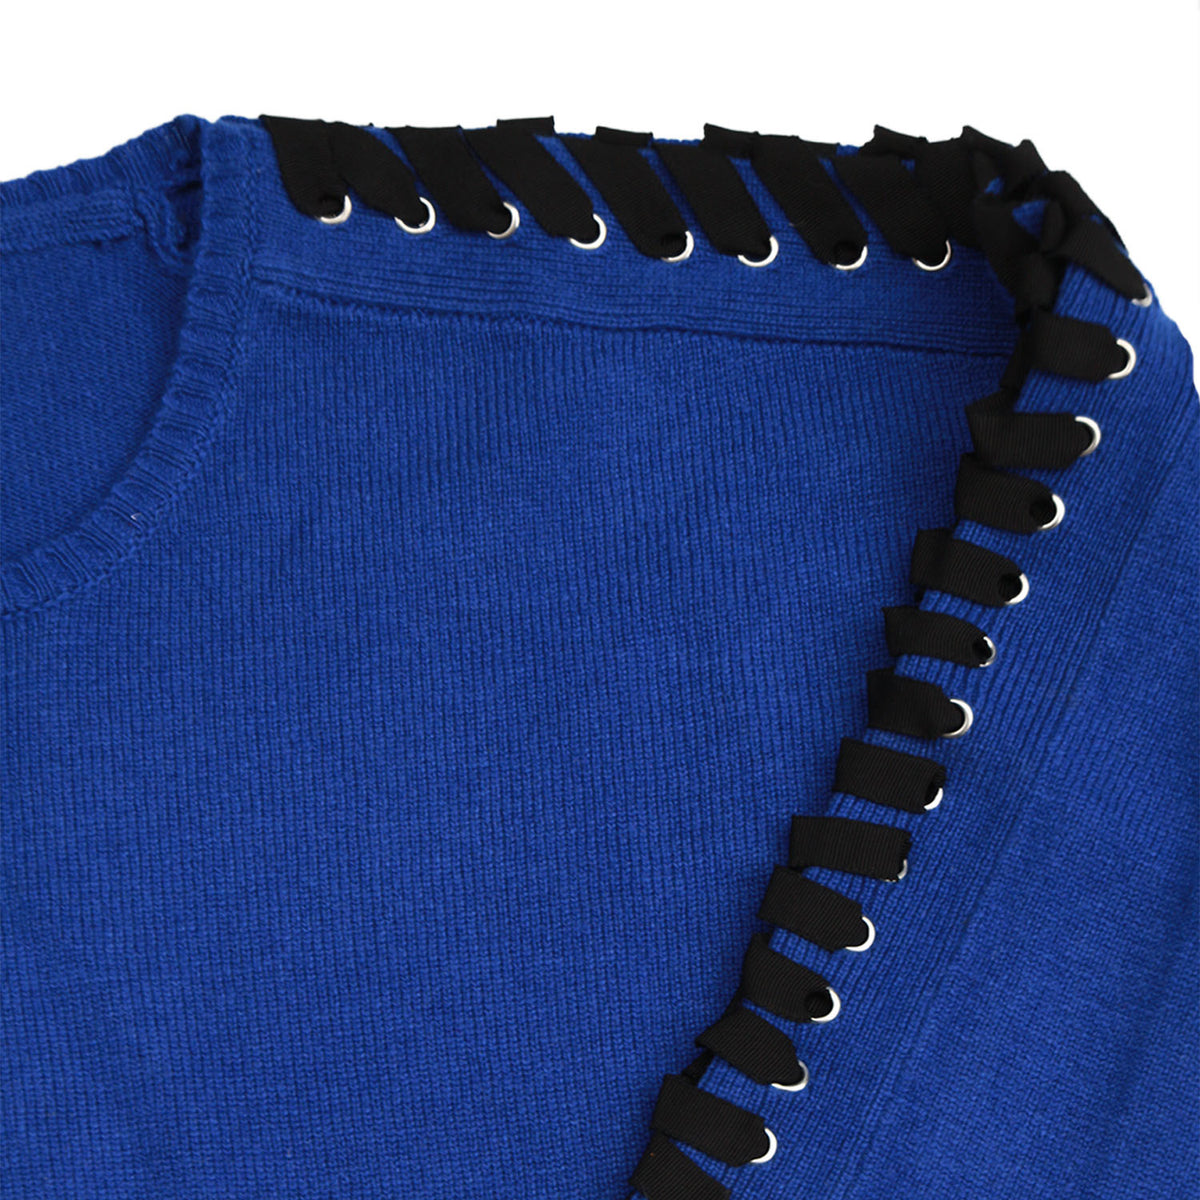 Sweater Rapsodia  Sevilla Azul